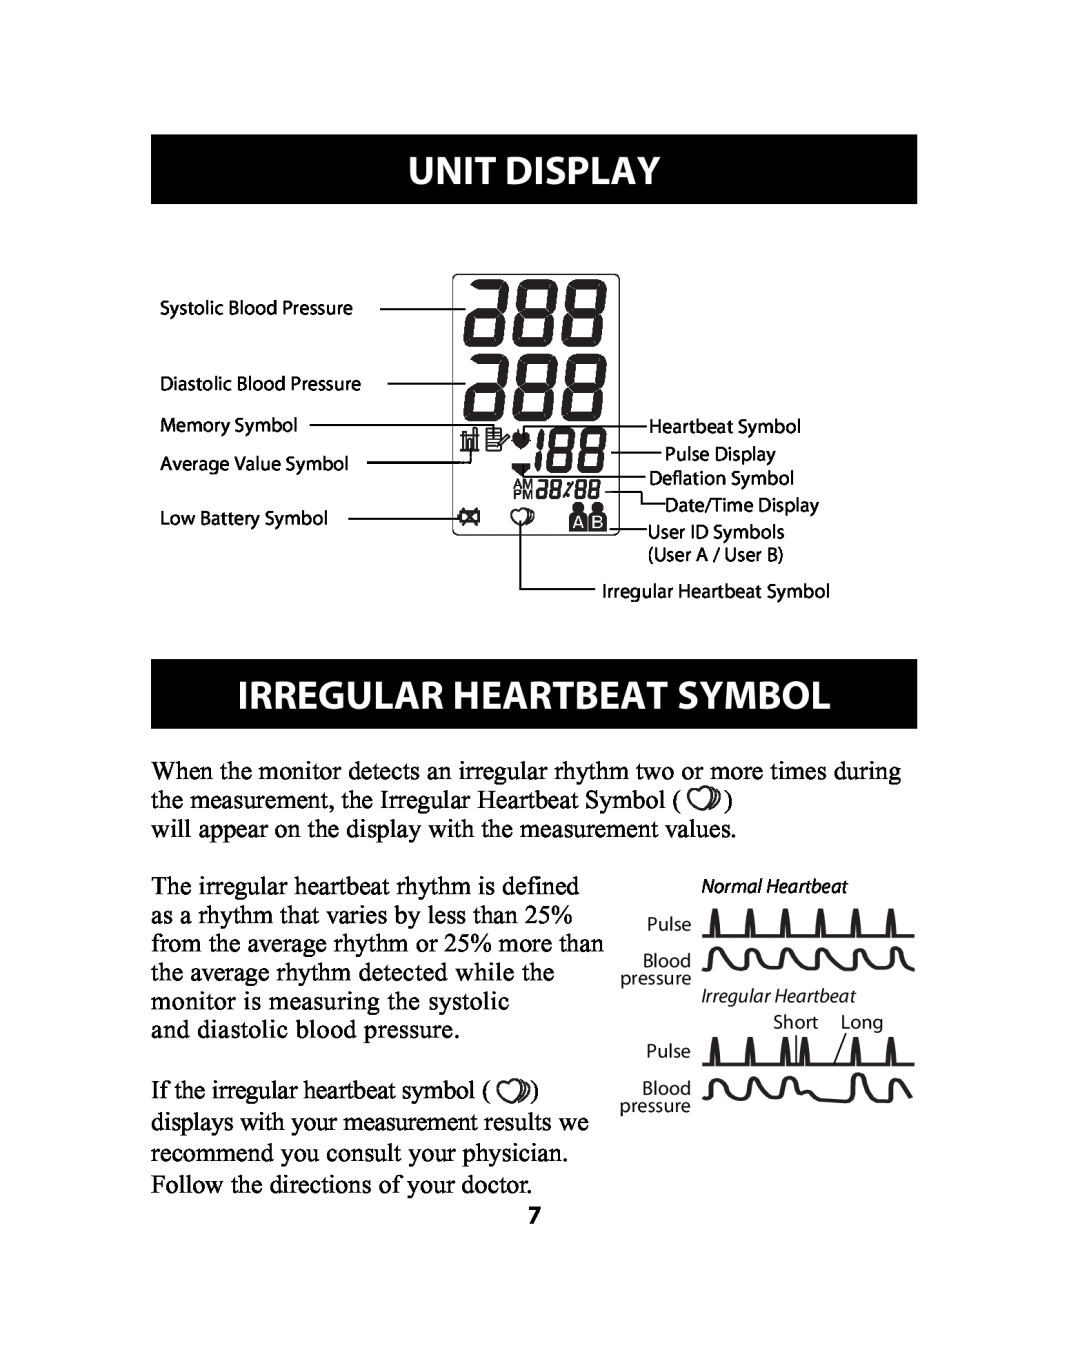 Omron Healthcare HEM-741CREL manual Unit Display, Irregular Heartbeat Symbol 